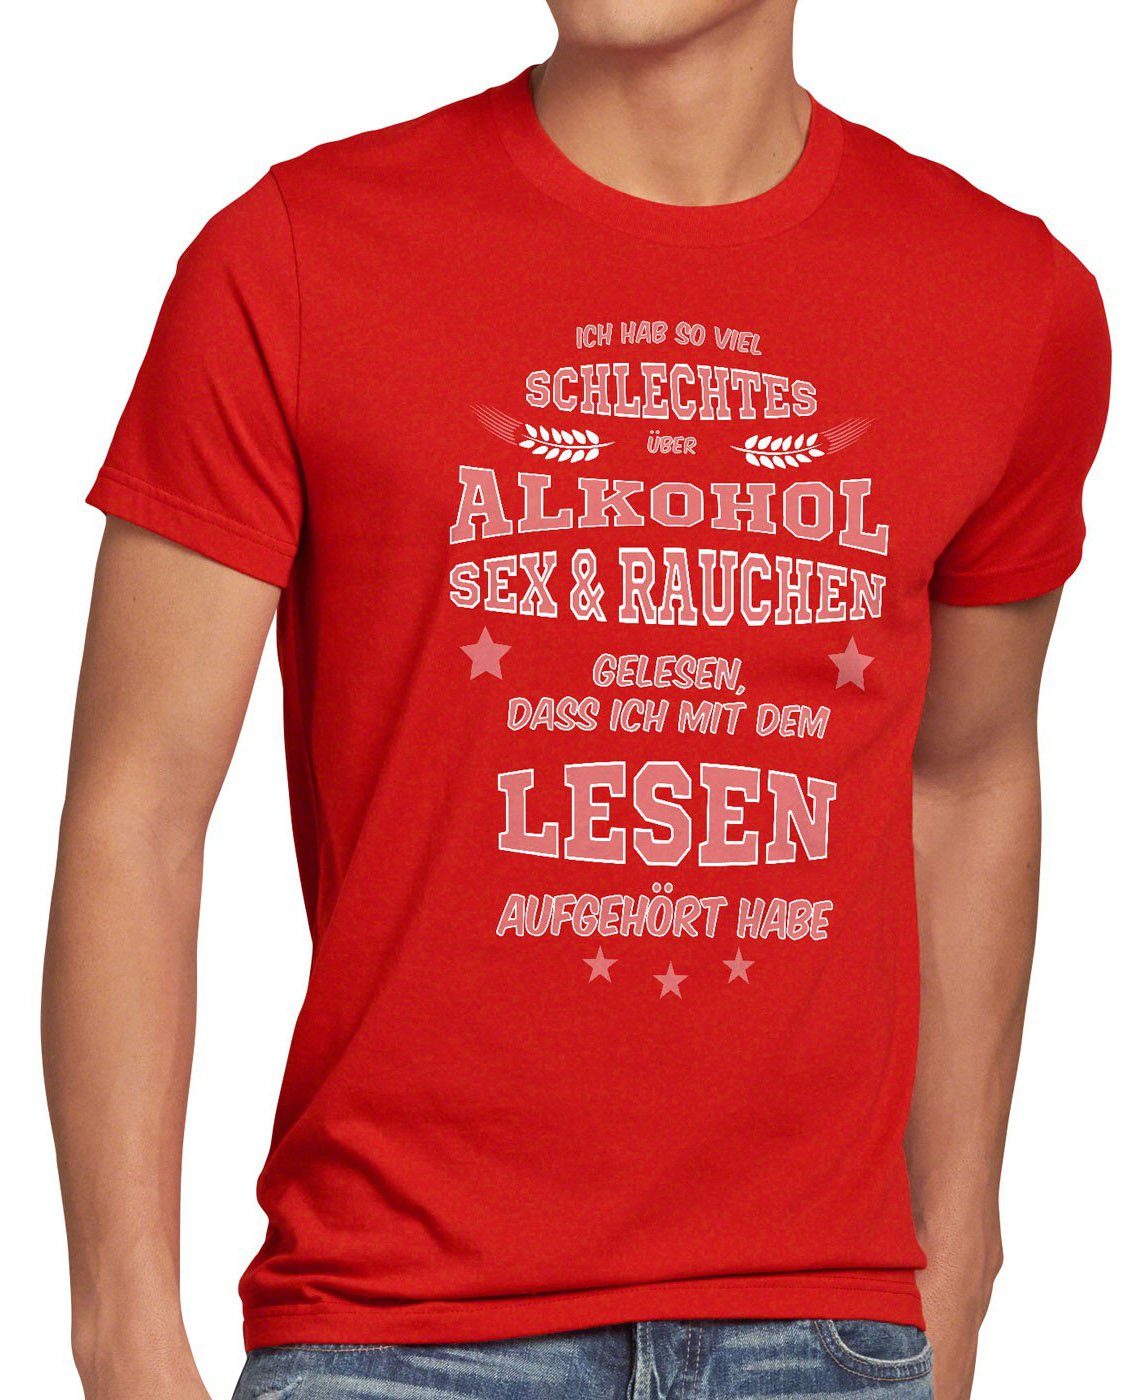 Sex style3 schlechtes Funshirt Viel rot Herren gelesen Print-Shirt Rauchen T-Shirt Fun Alkohol Spruch